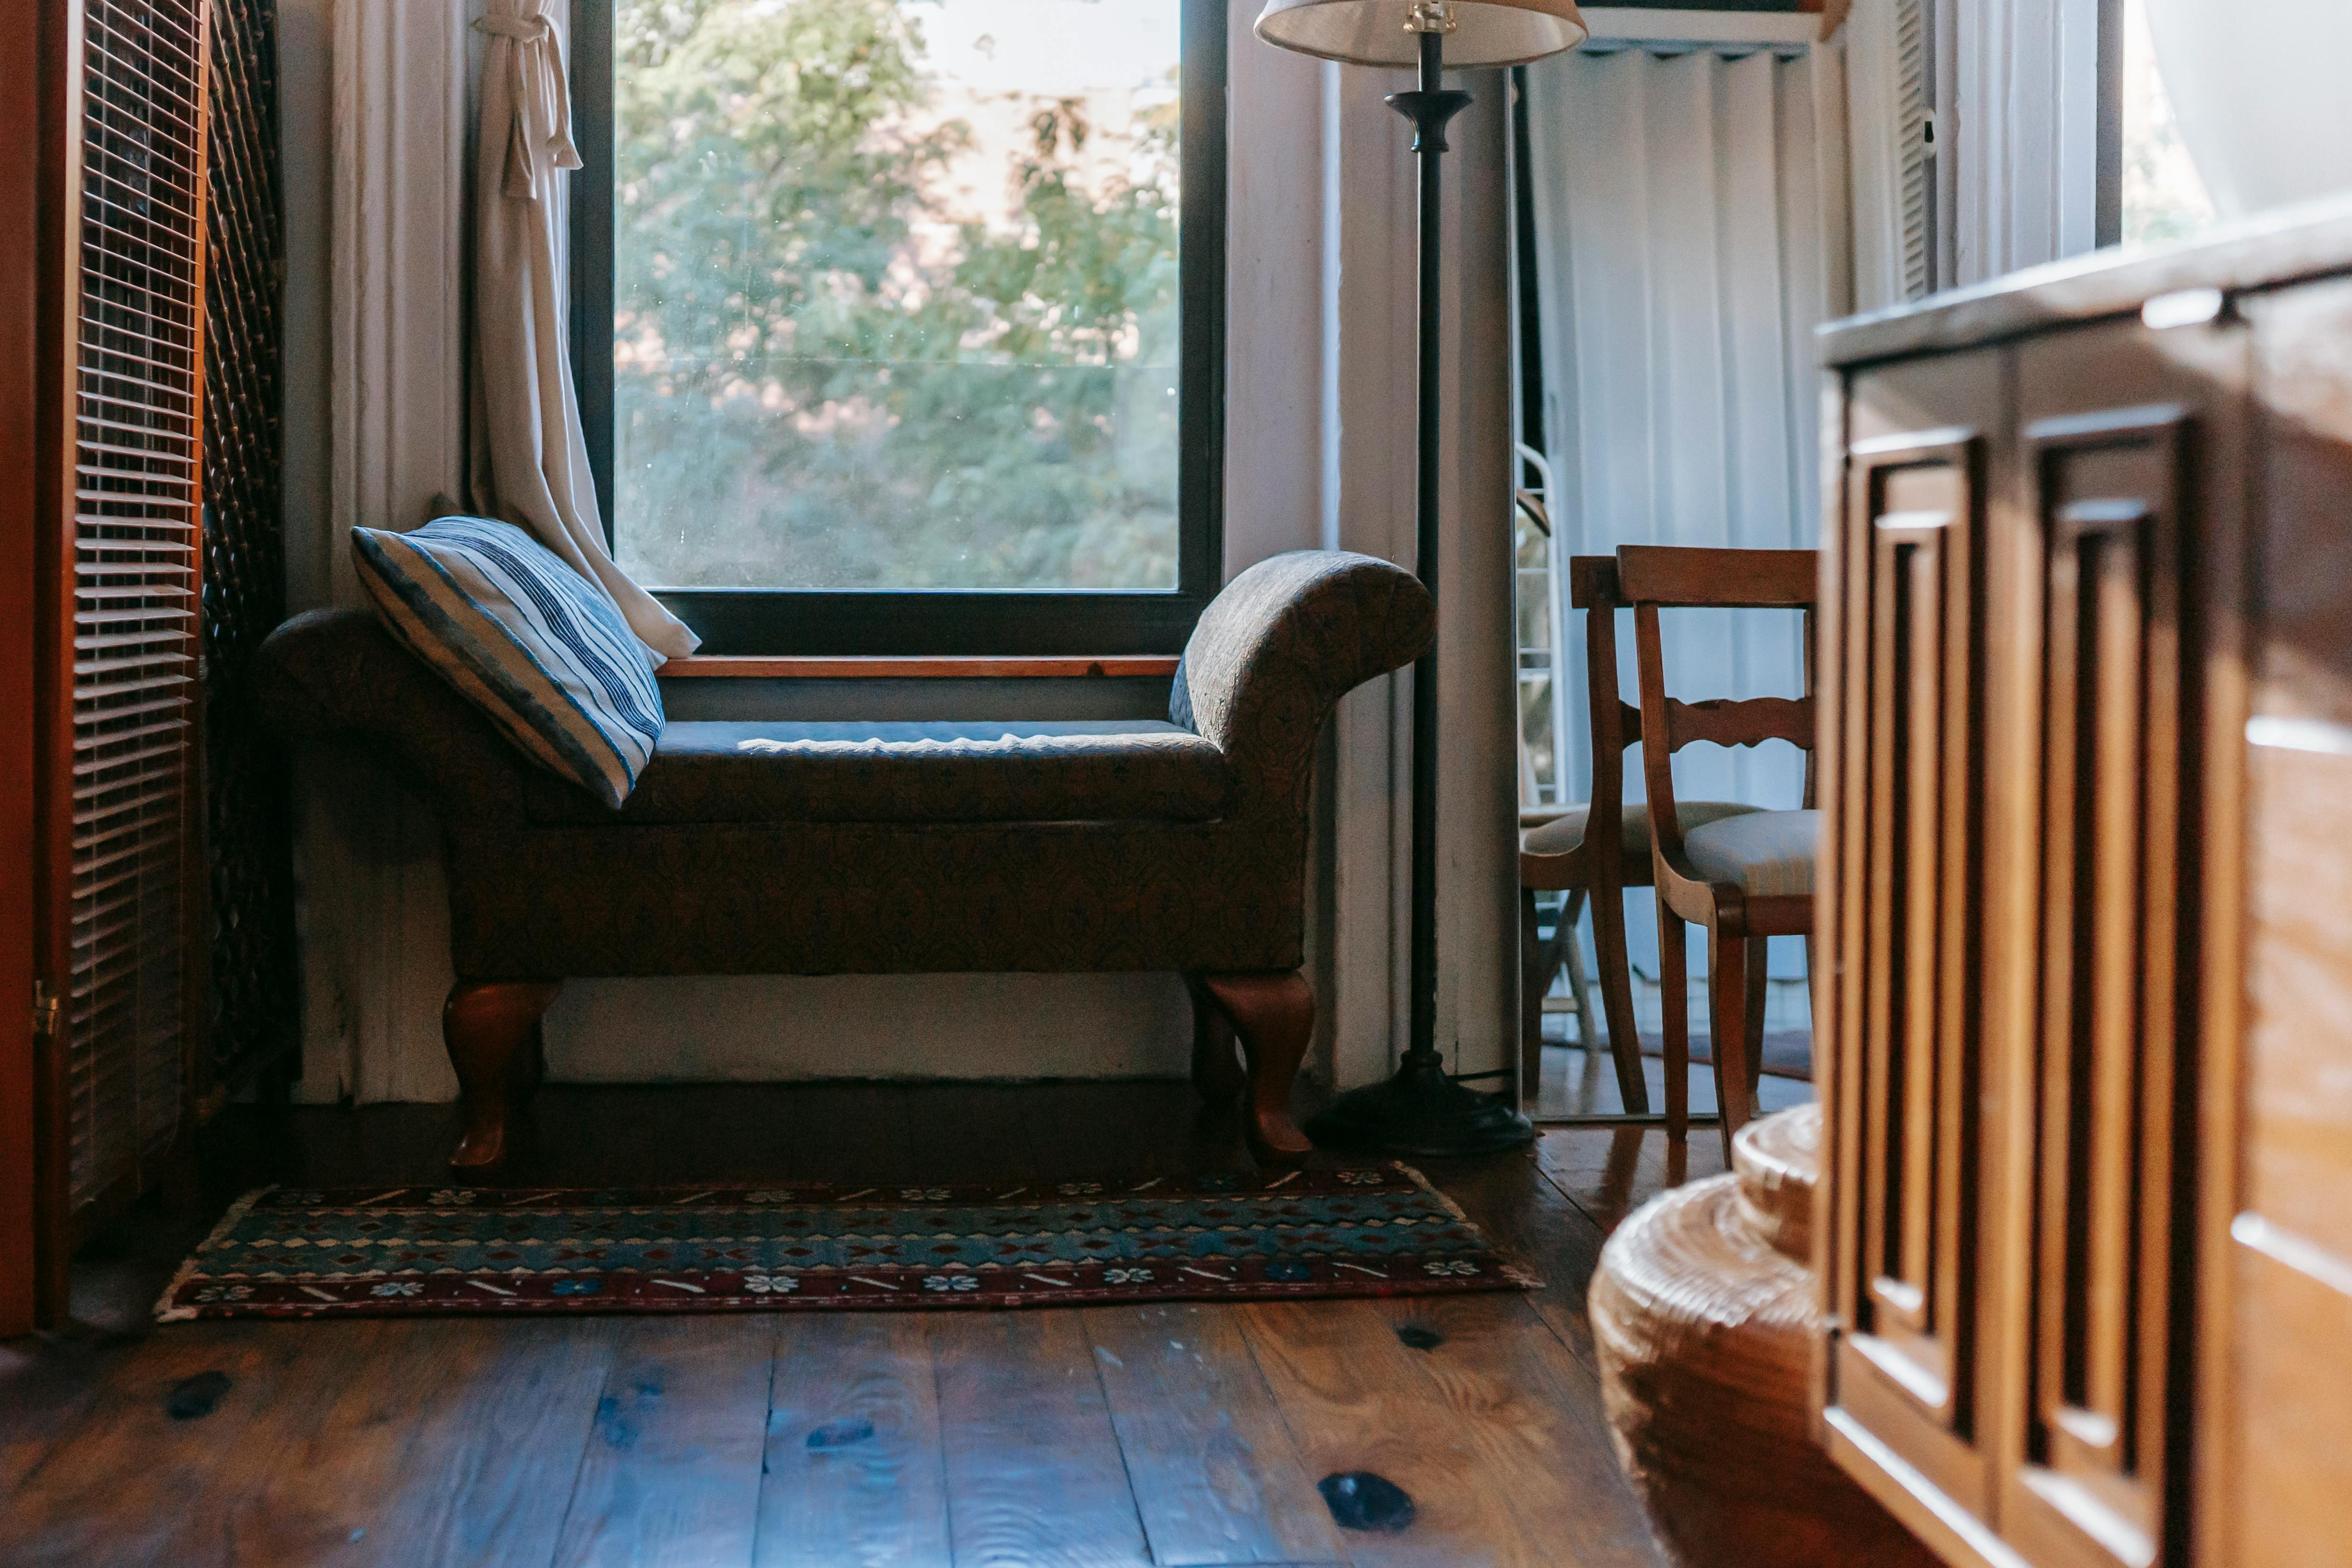 Ottoman chair with throw pillow near a window